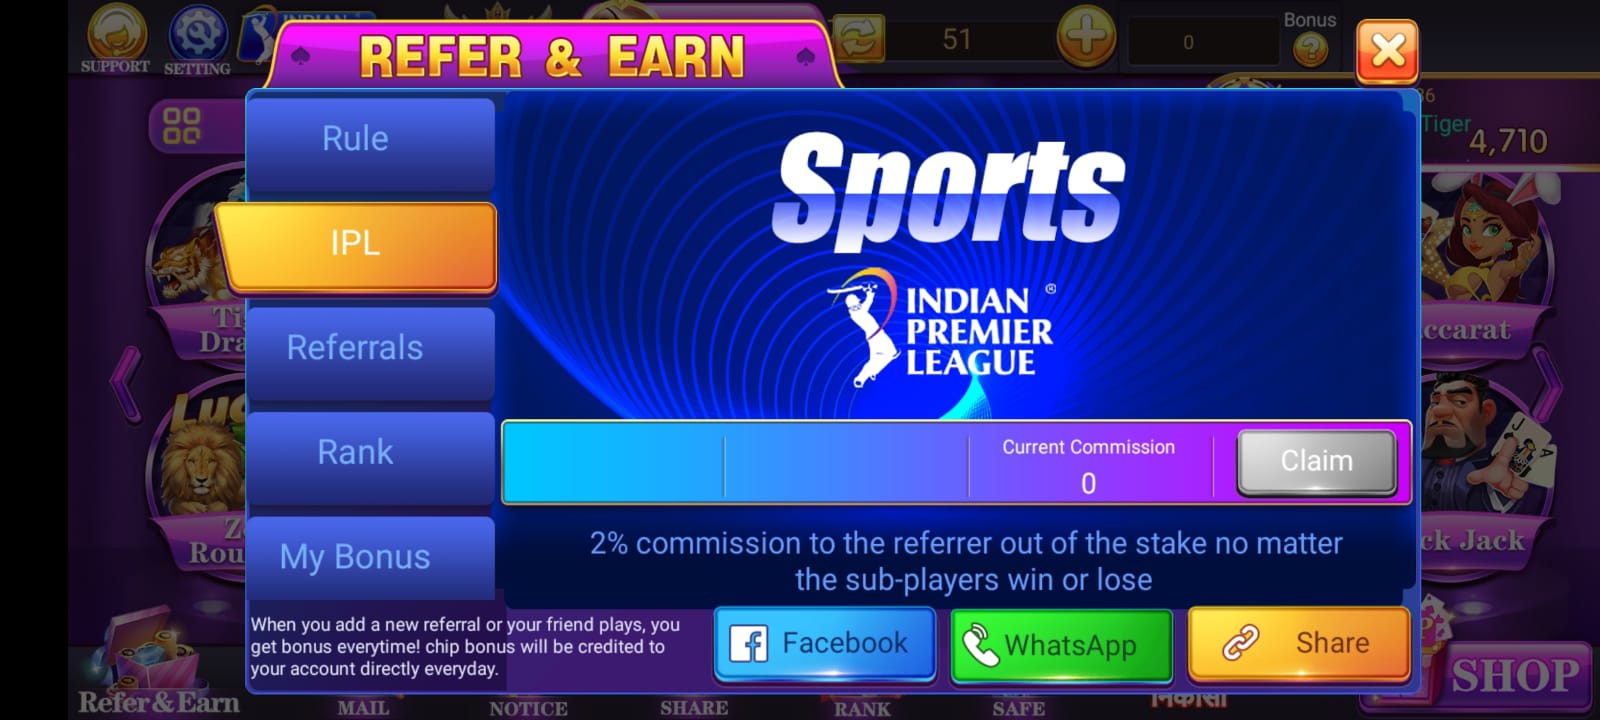 IPL Bonus Share Holy Rummy & Win 10 Lakh Every Daily